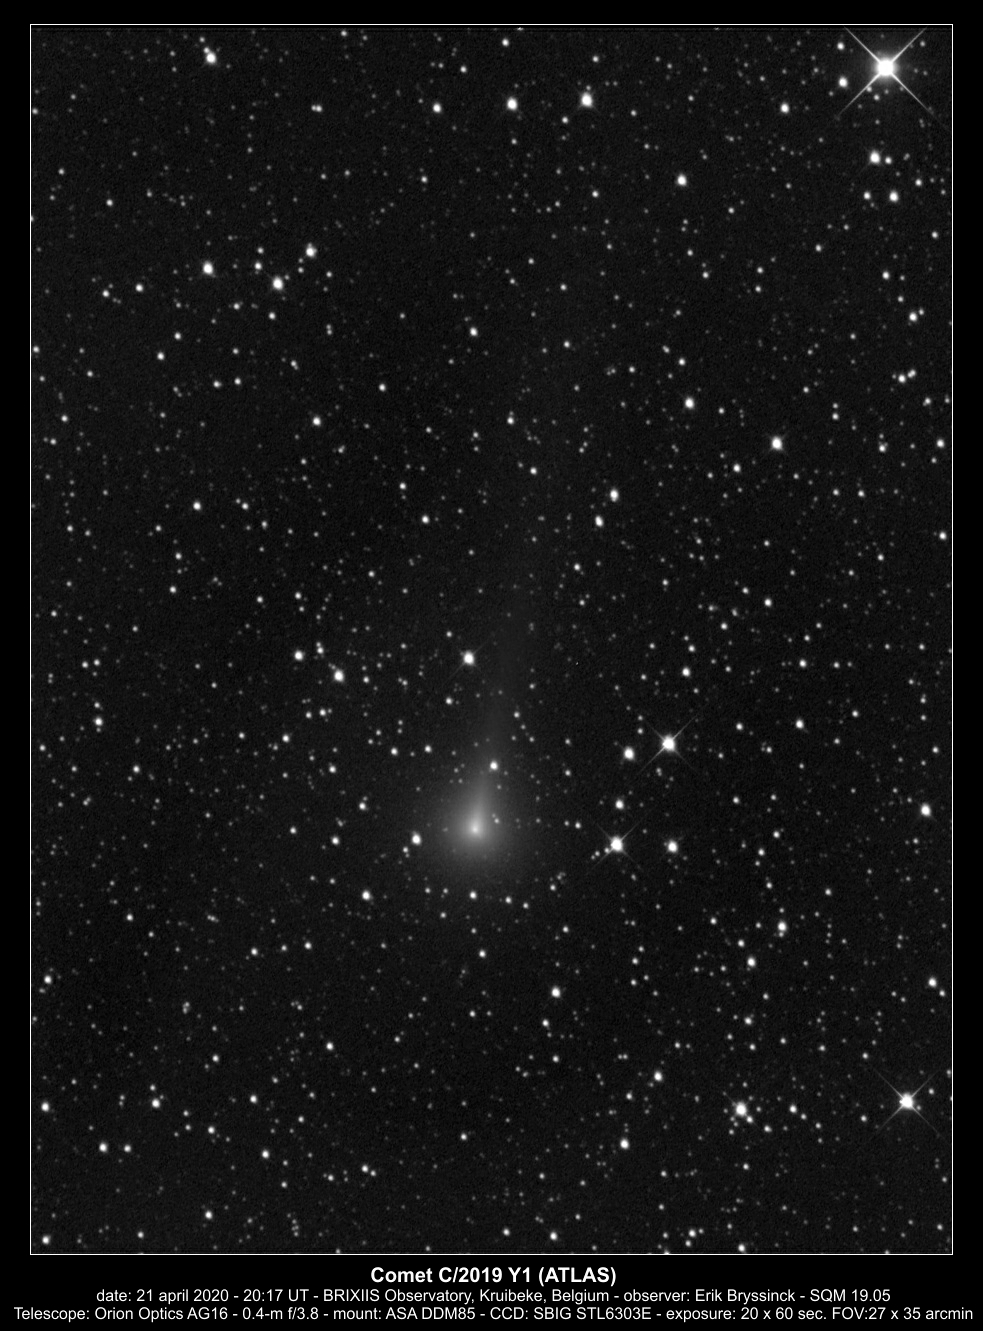 comet C/2019 Y1 (ATLAS) on 21 april 2020, Erik Bryssinck, BRIXIIS Observatory, B96 observatory